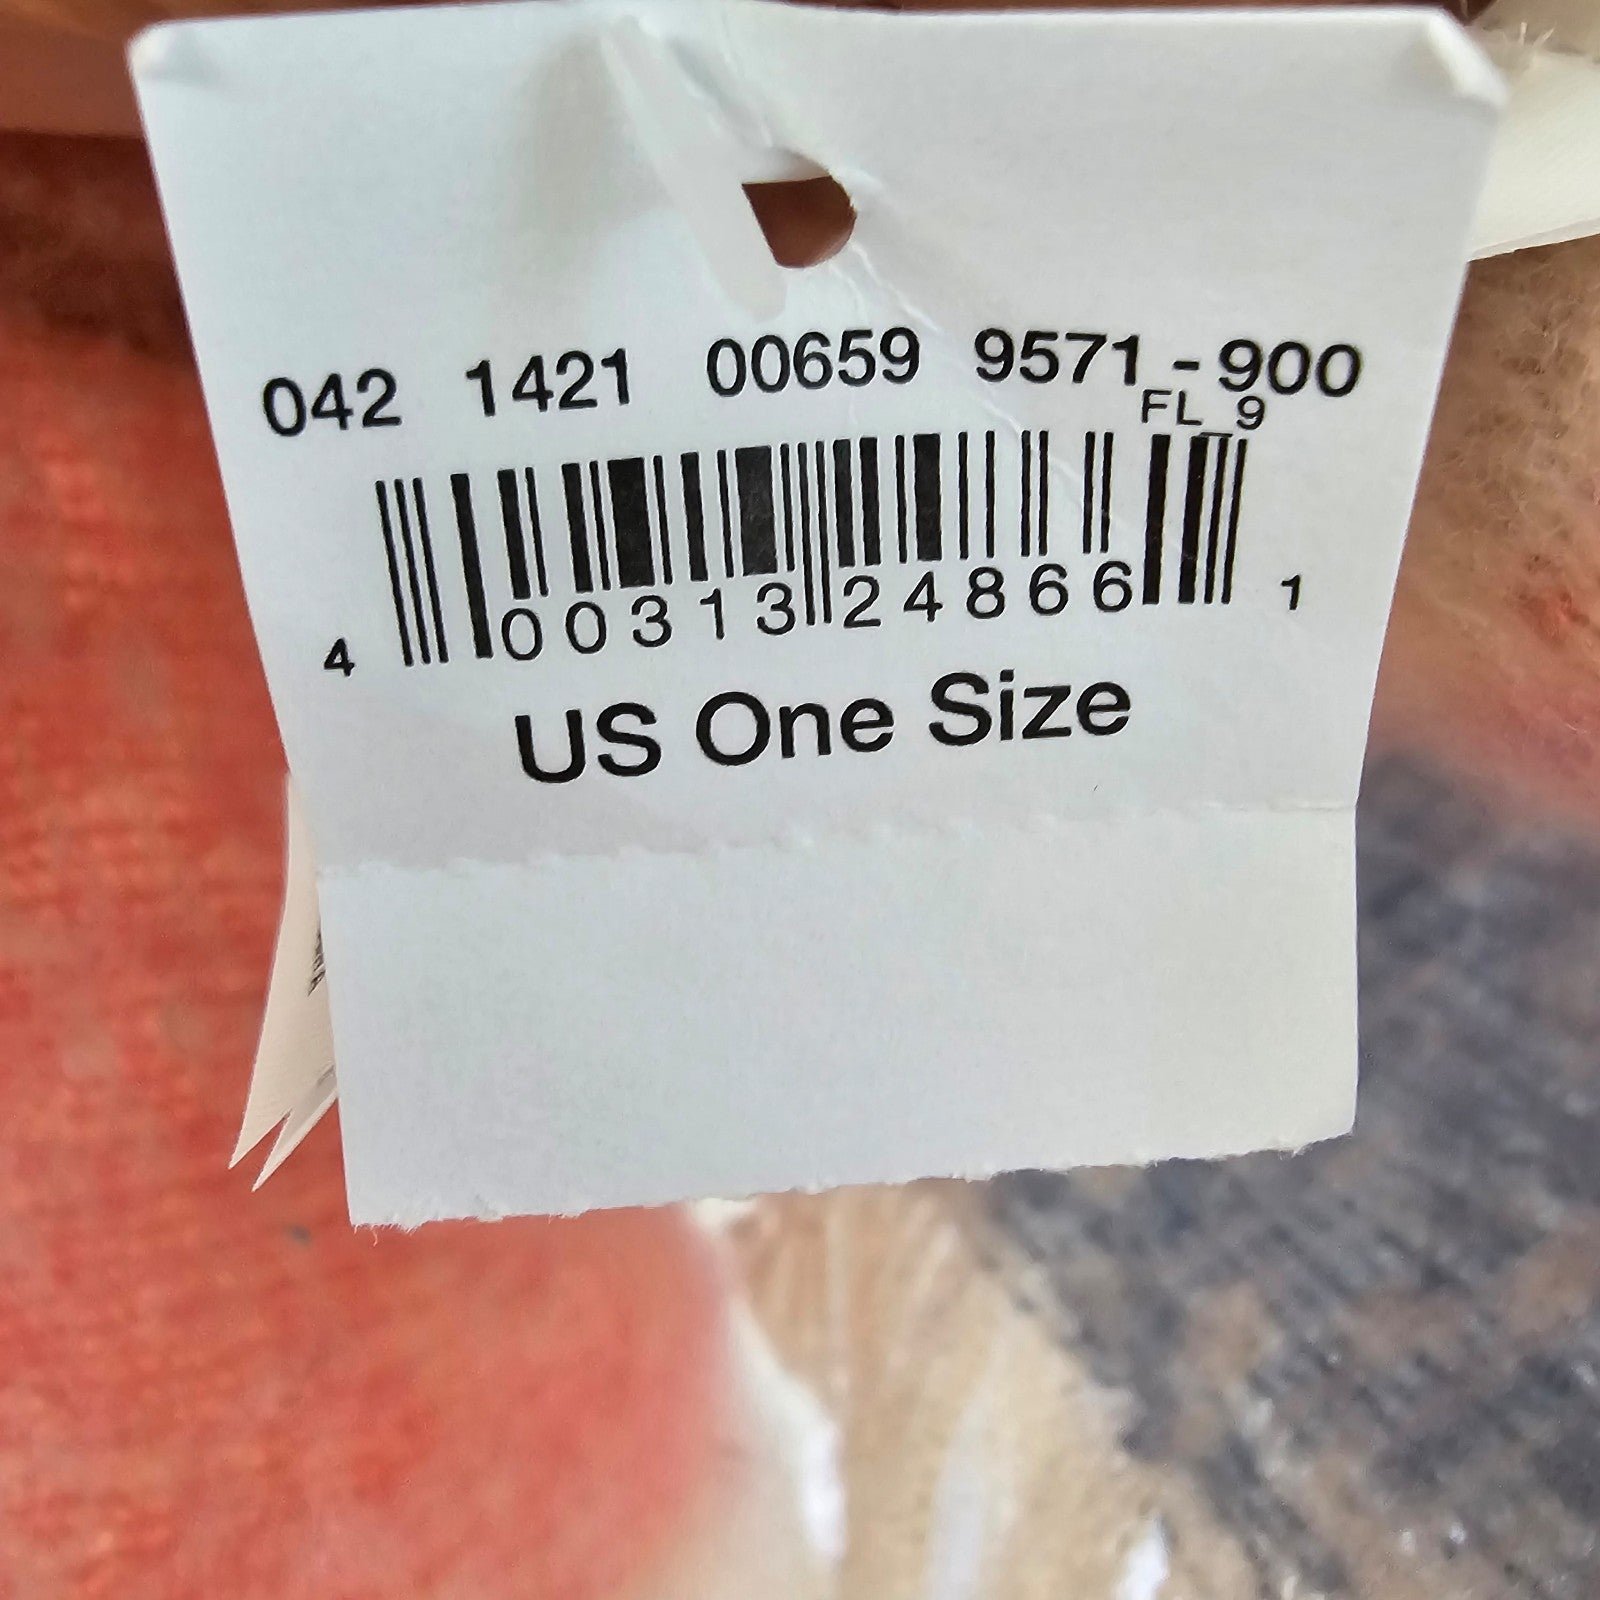 Wholesale price American Eagle Colorful Striped Fringe Boho Cozy Oversized Blanket Scarf 18×80 OuM9yJ3eS Buying Cheap